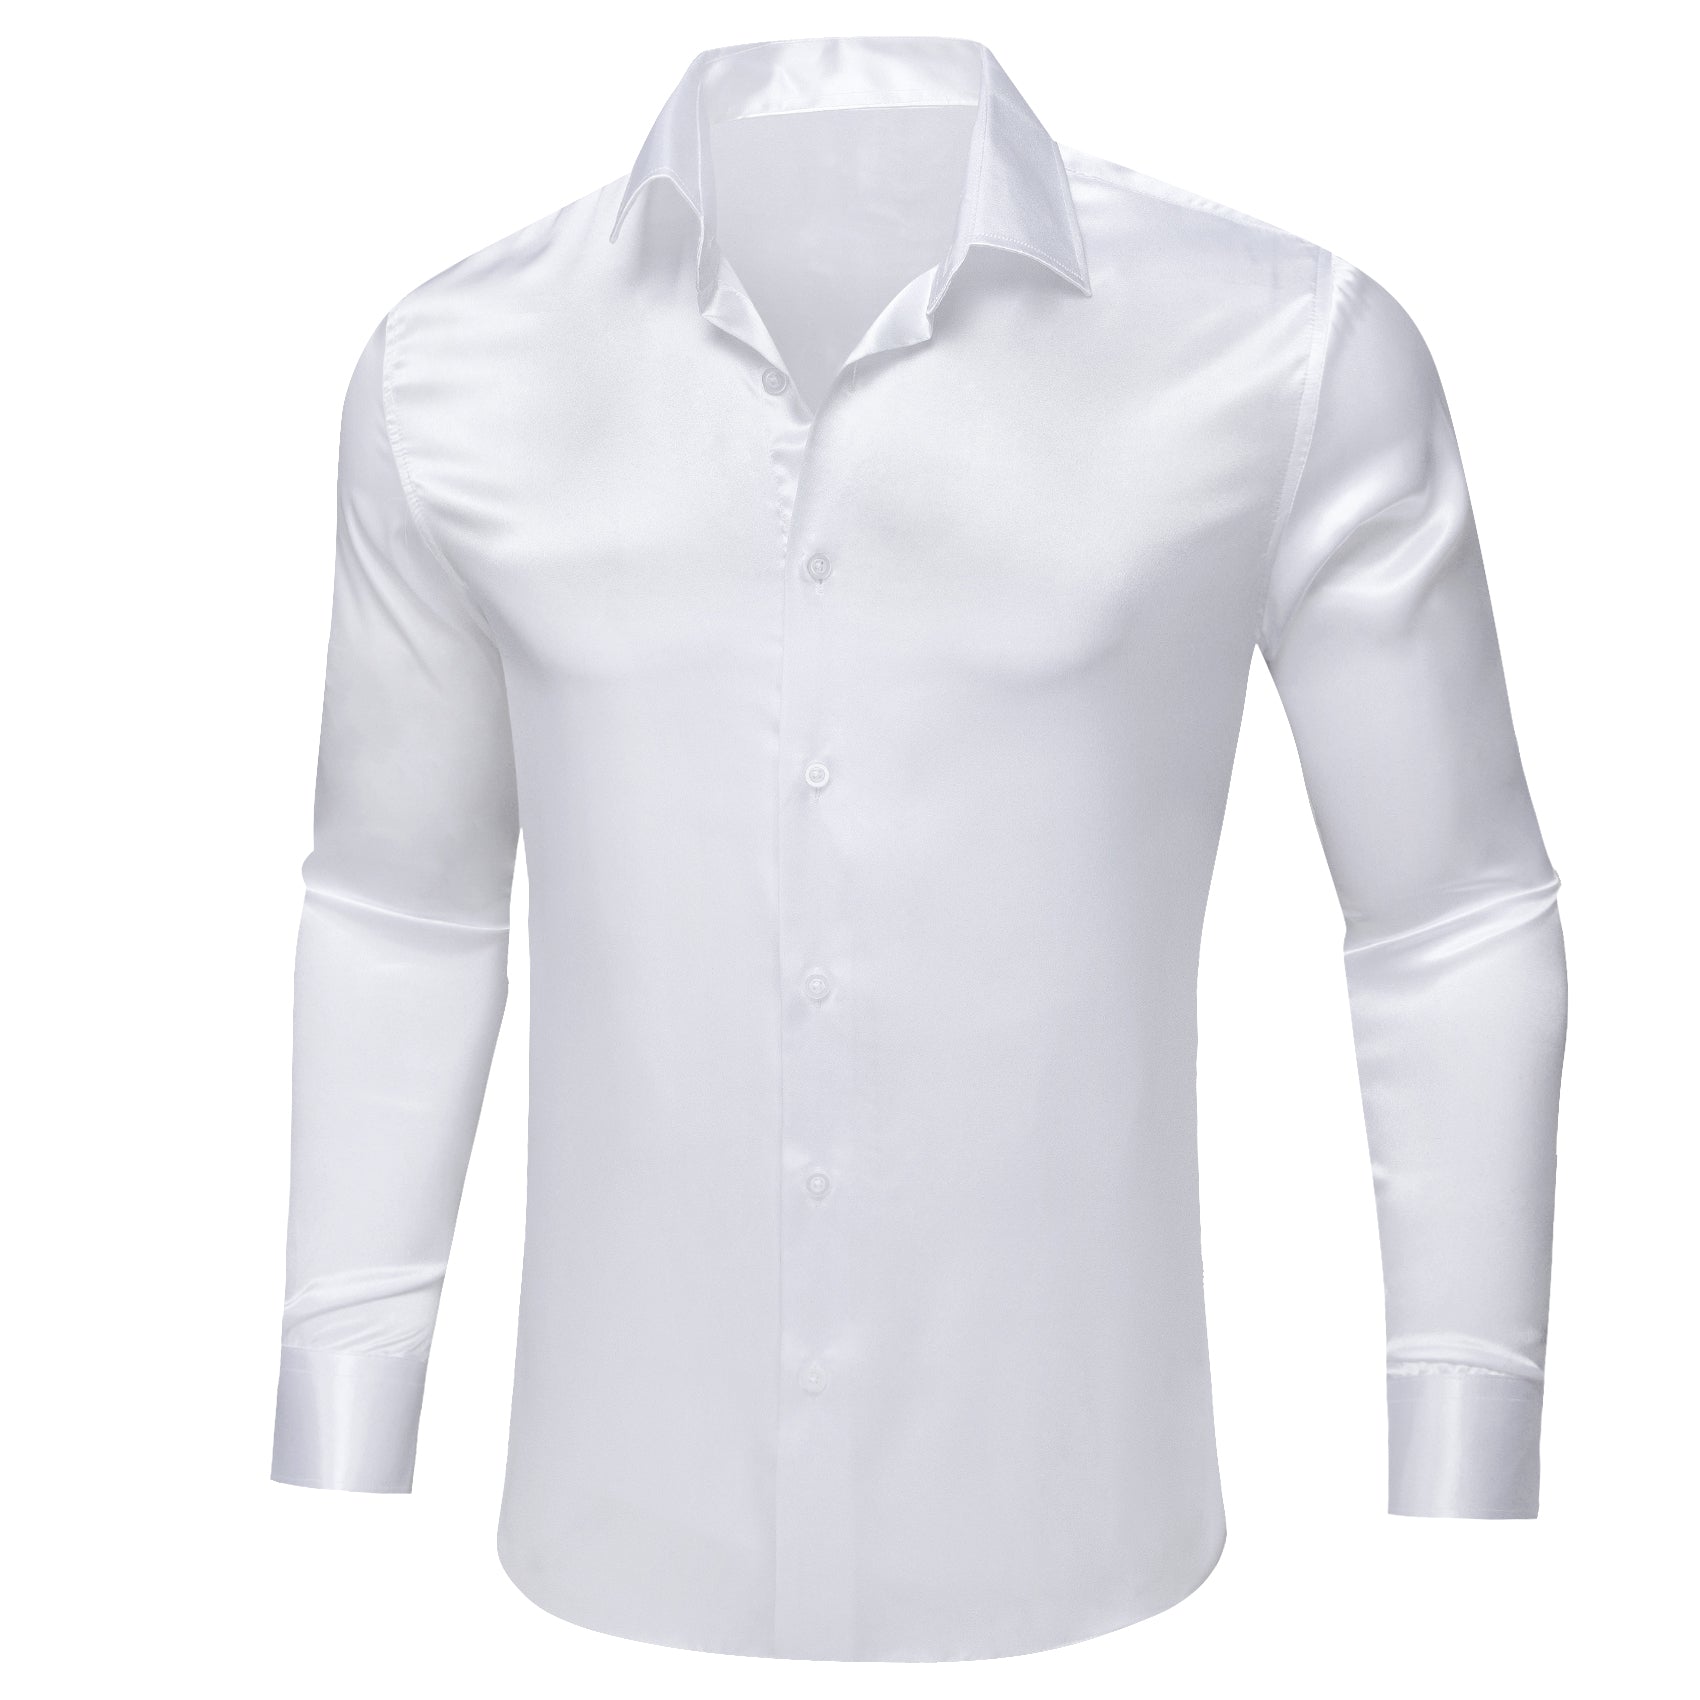 Barry.wang White Solid Silk Shirt